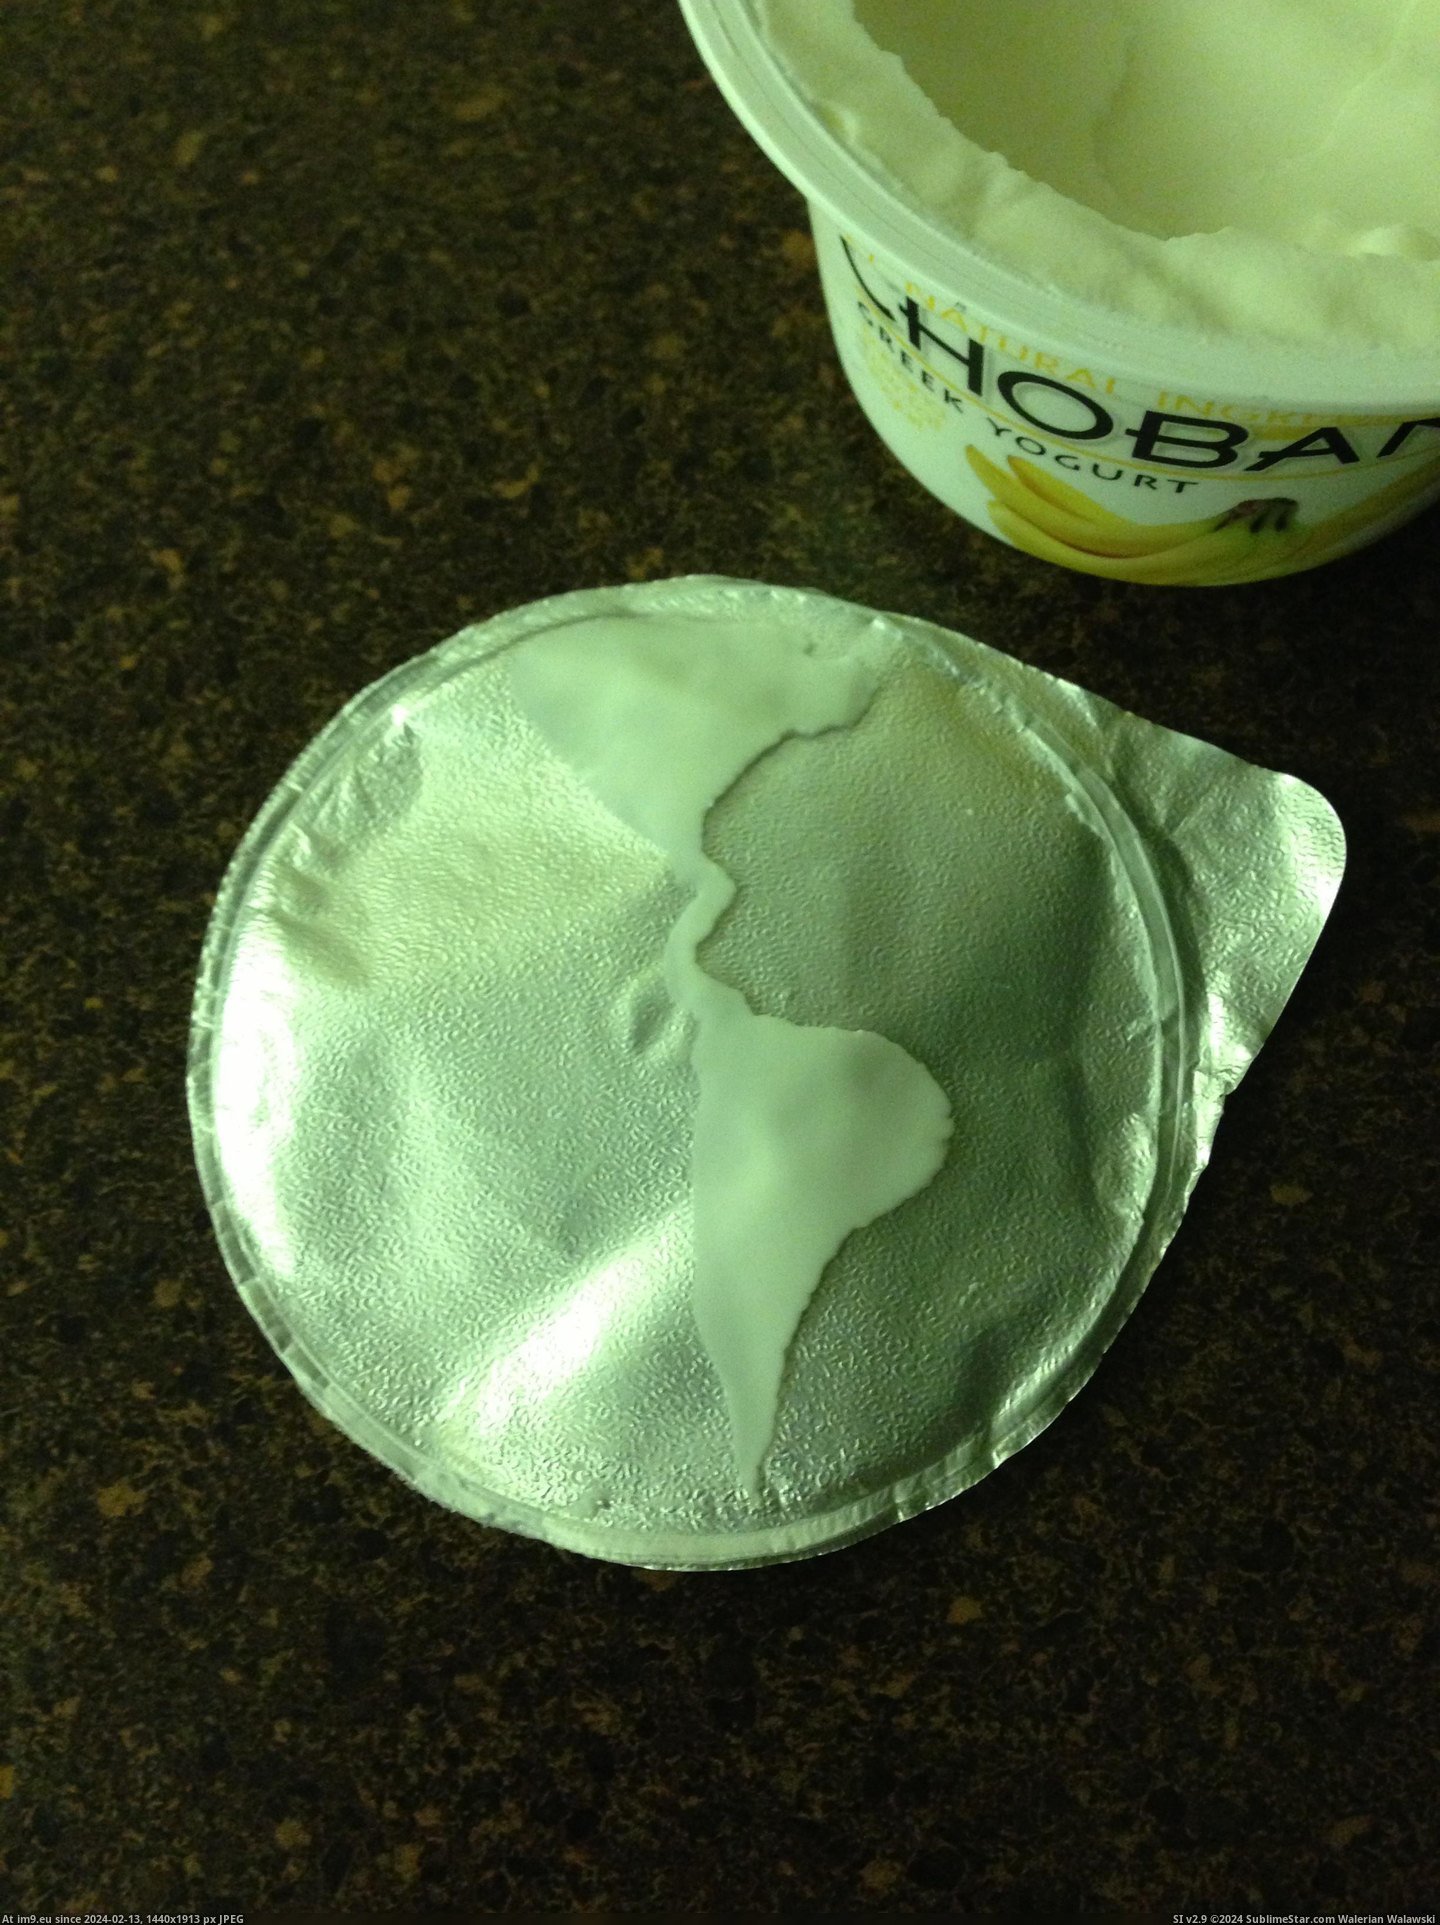 [Mildlyinteresting] The yogurt that stuck to my lid looks like the Americas (in My r/MILDLYINTERESTING favs)